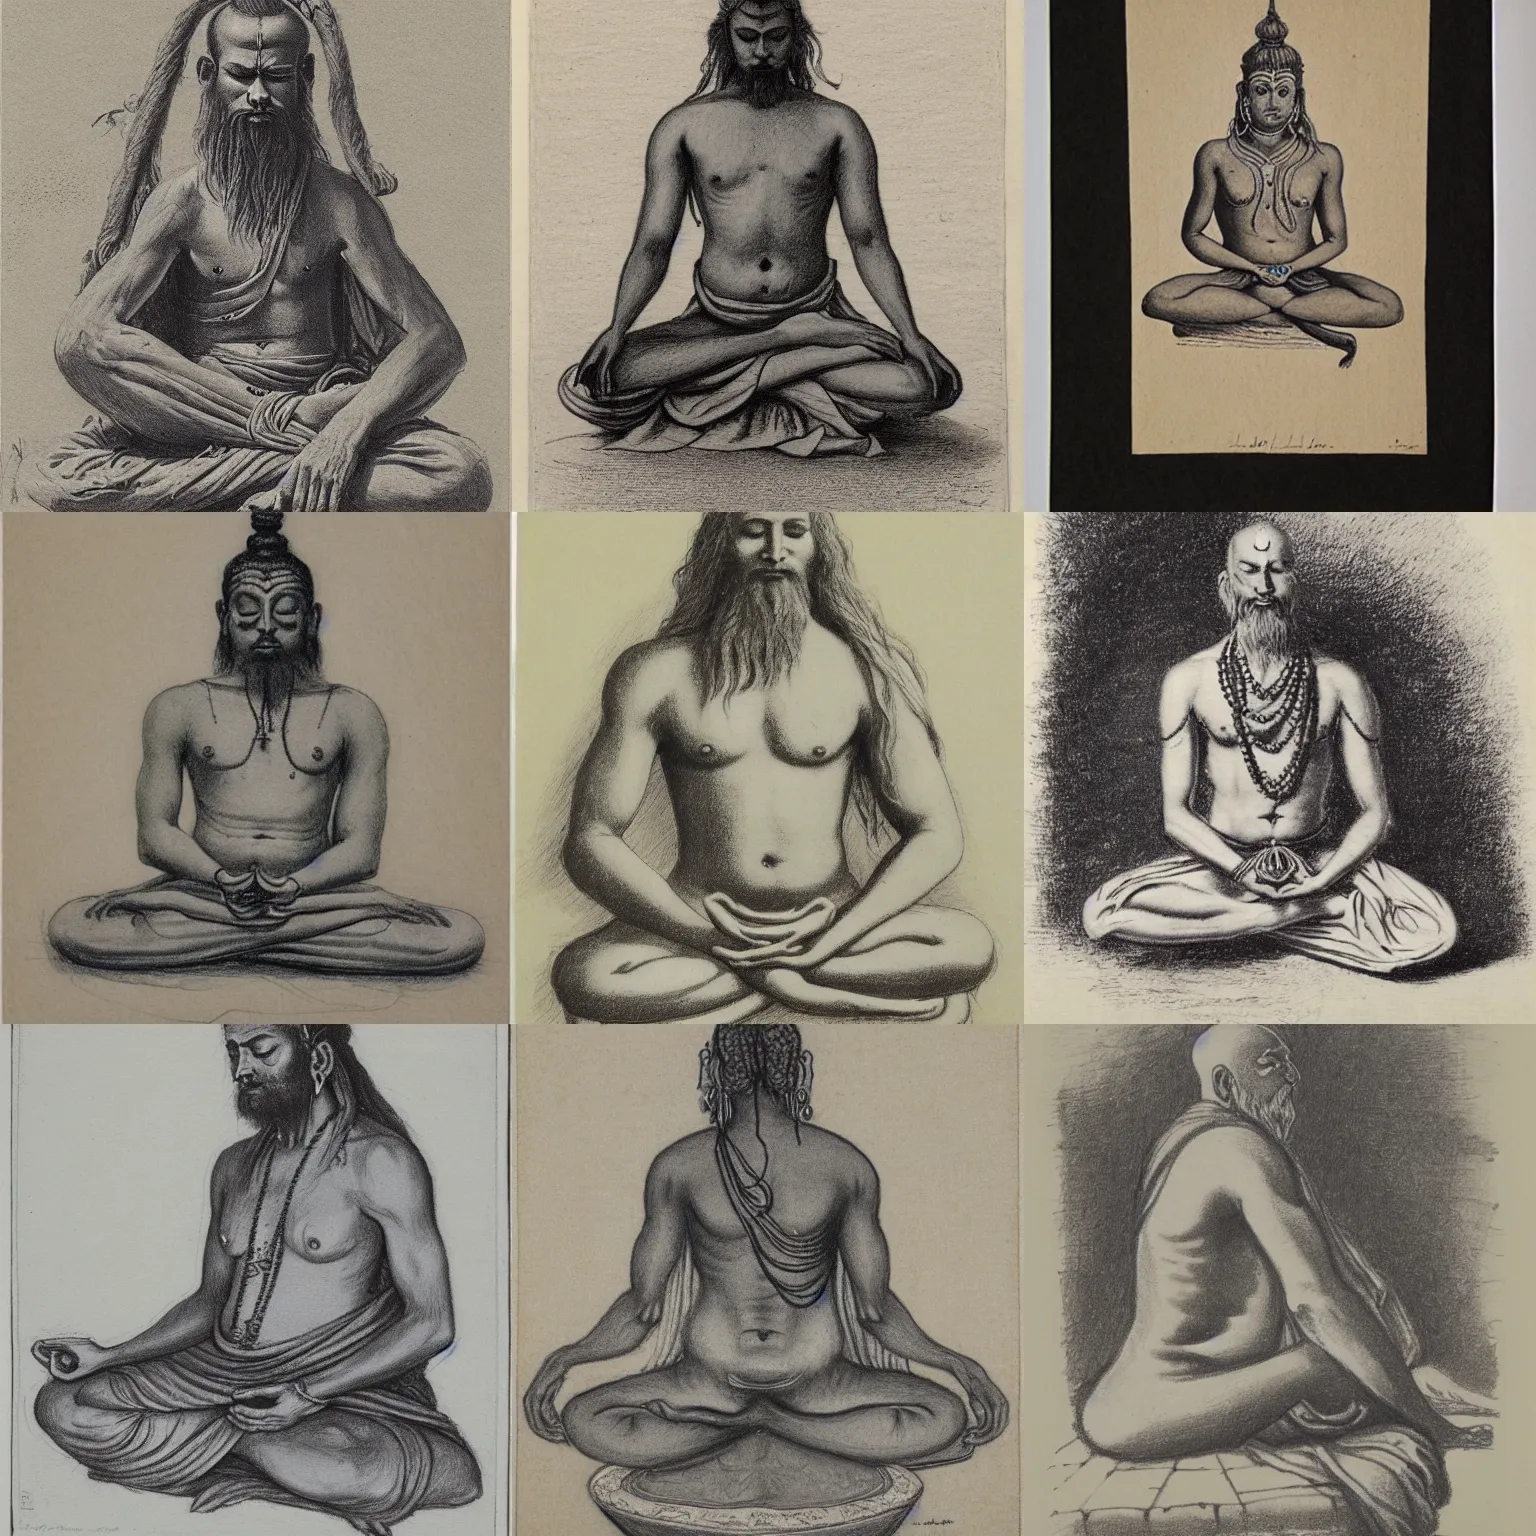 Prompt: fullbody sketch of a cool sadhu meditating, etching by louis le breton, 1 8 6 9, 1 2 0 0 dpi scan